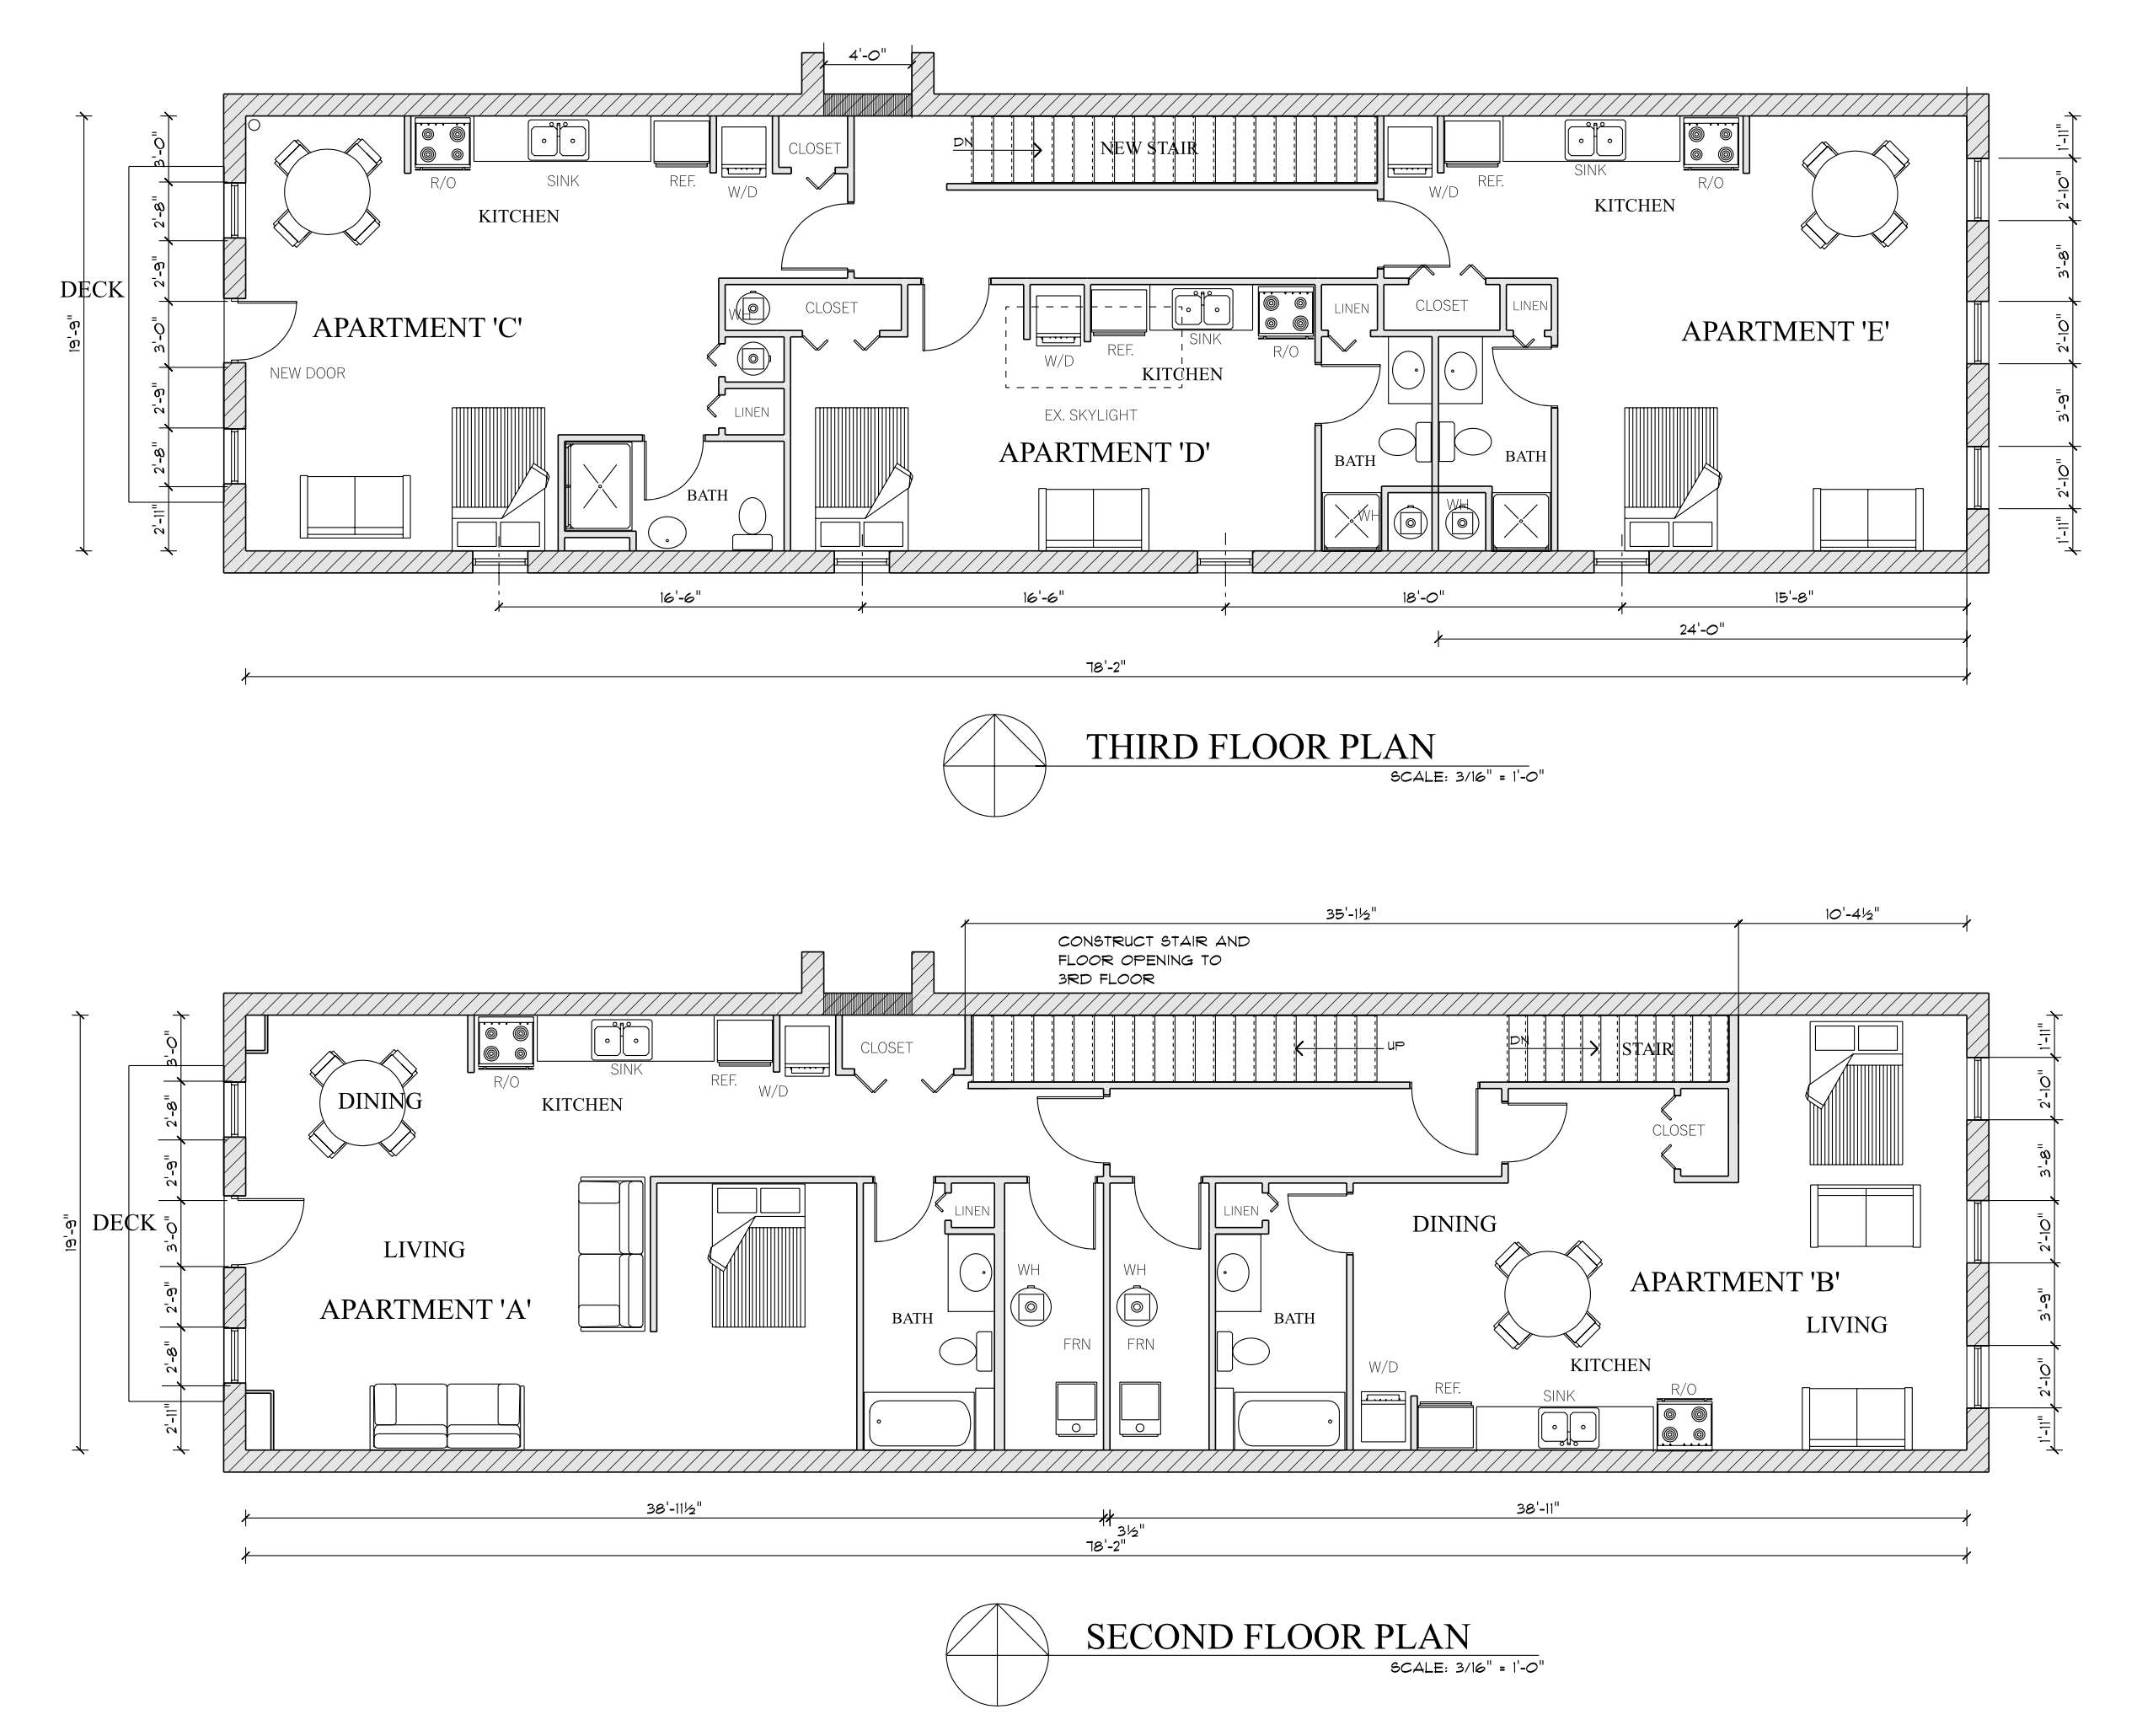 8 S. Monroe Residential Unit Plans